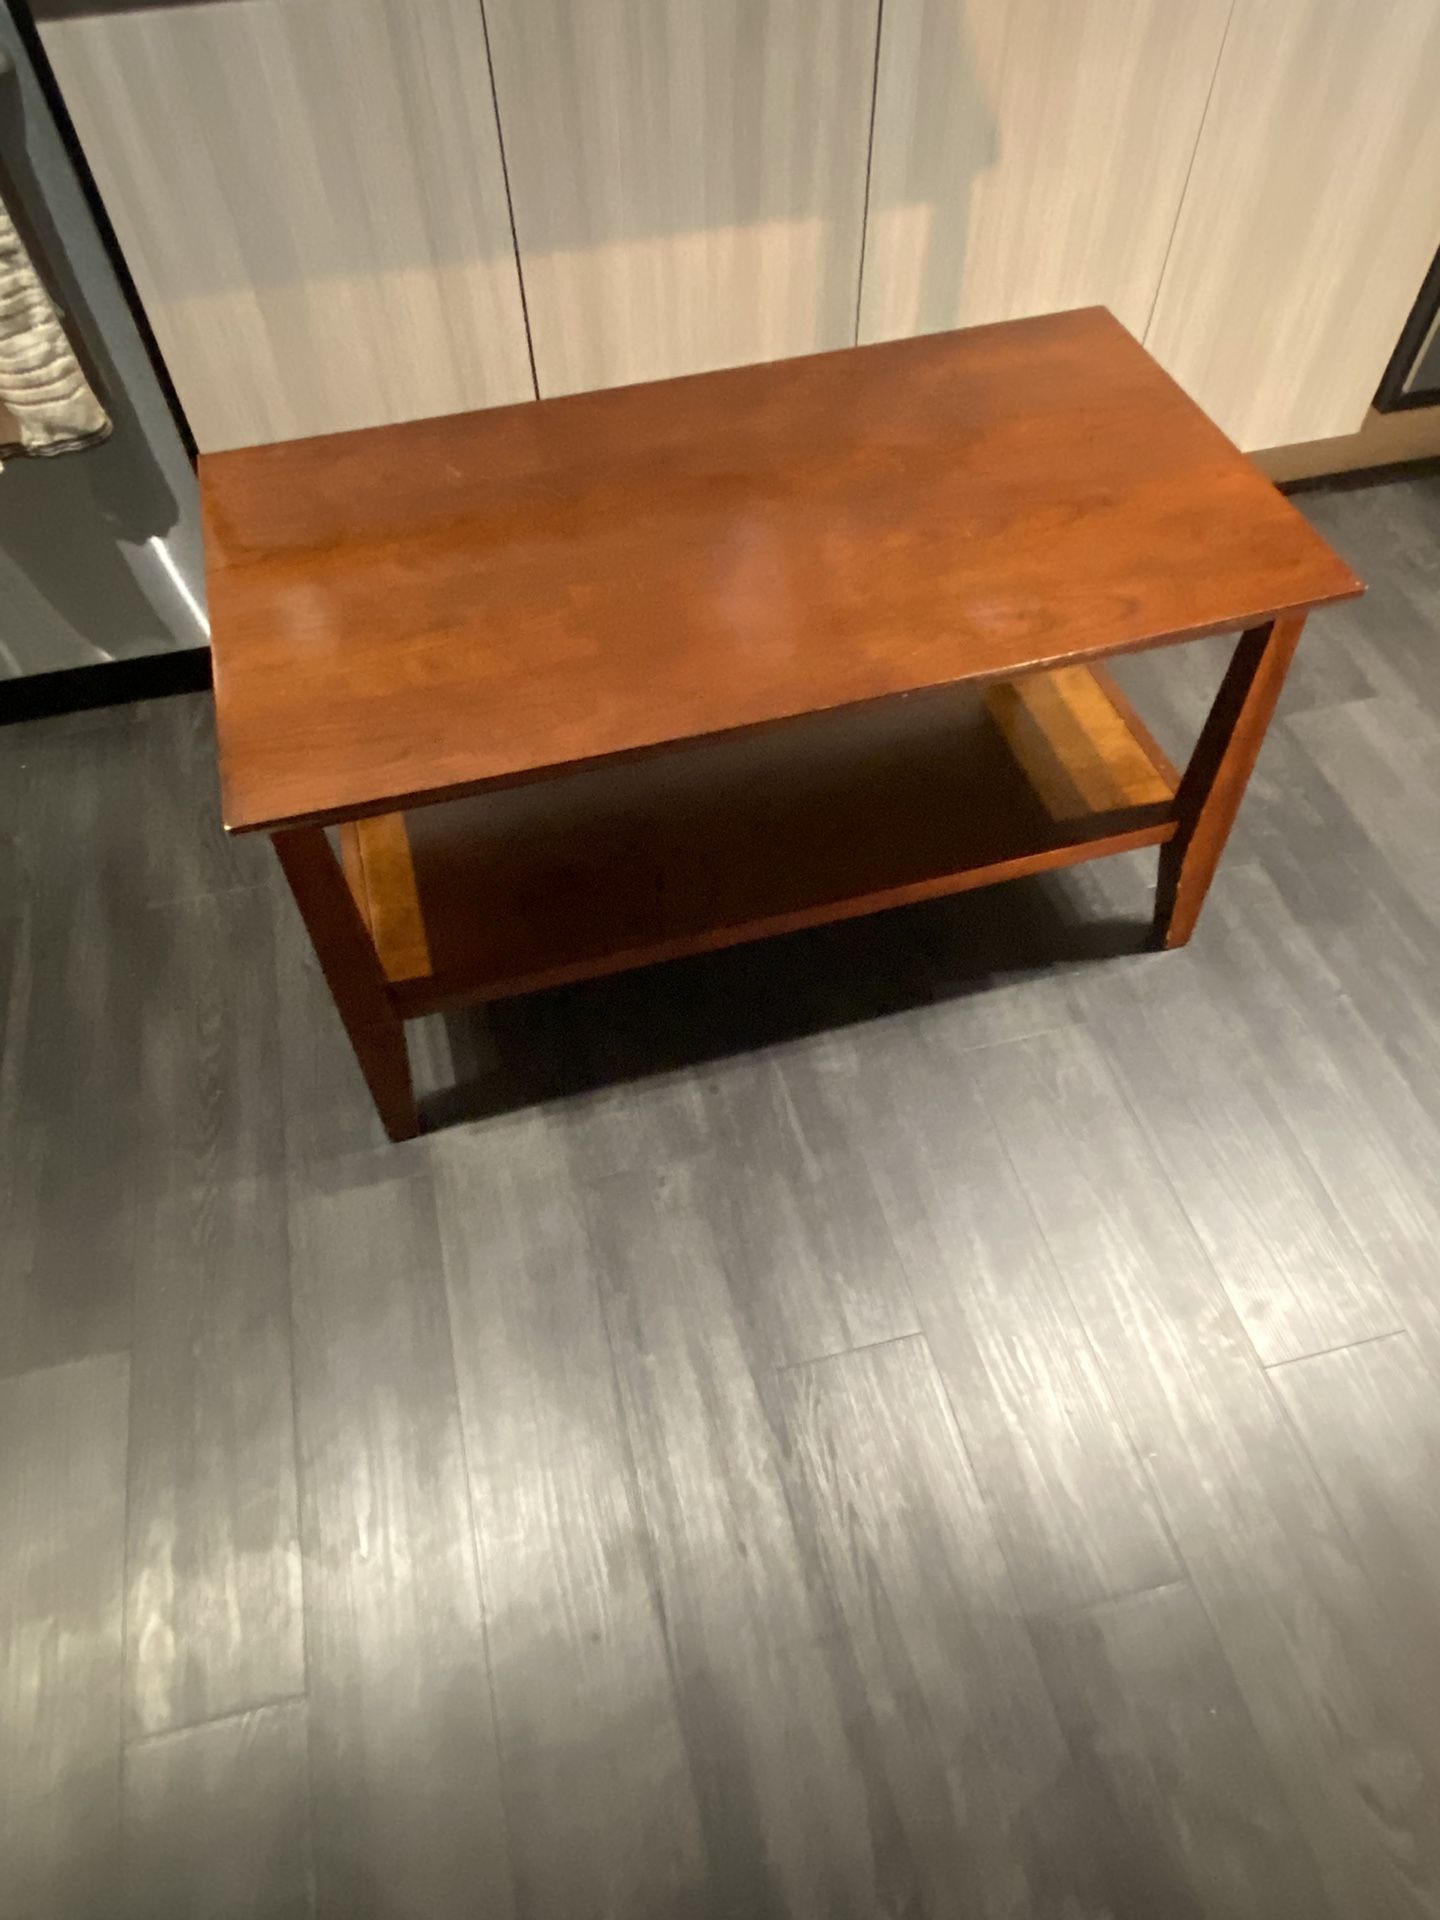 Wood Coffee Table (2 Tier) - Brown